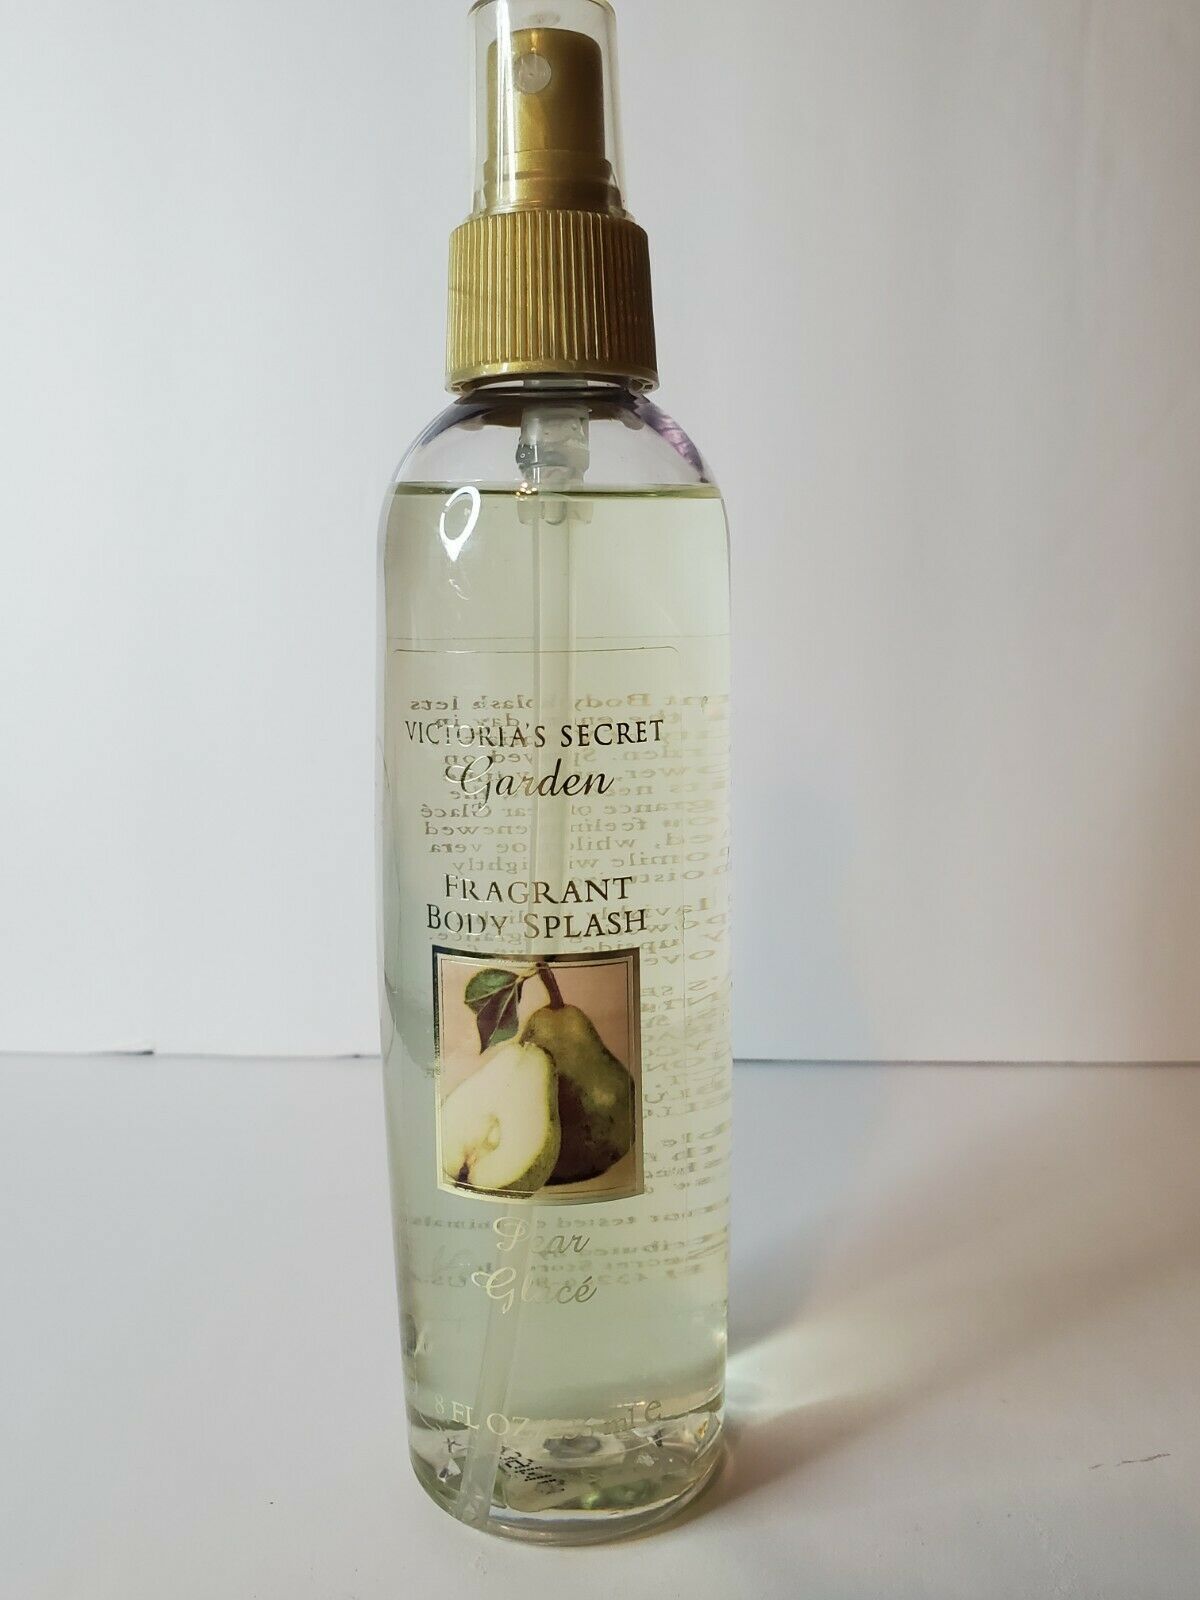 Primary image for Victoria's Secret Garden pear Glace Spray silkening body splash rare full